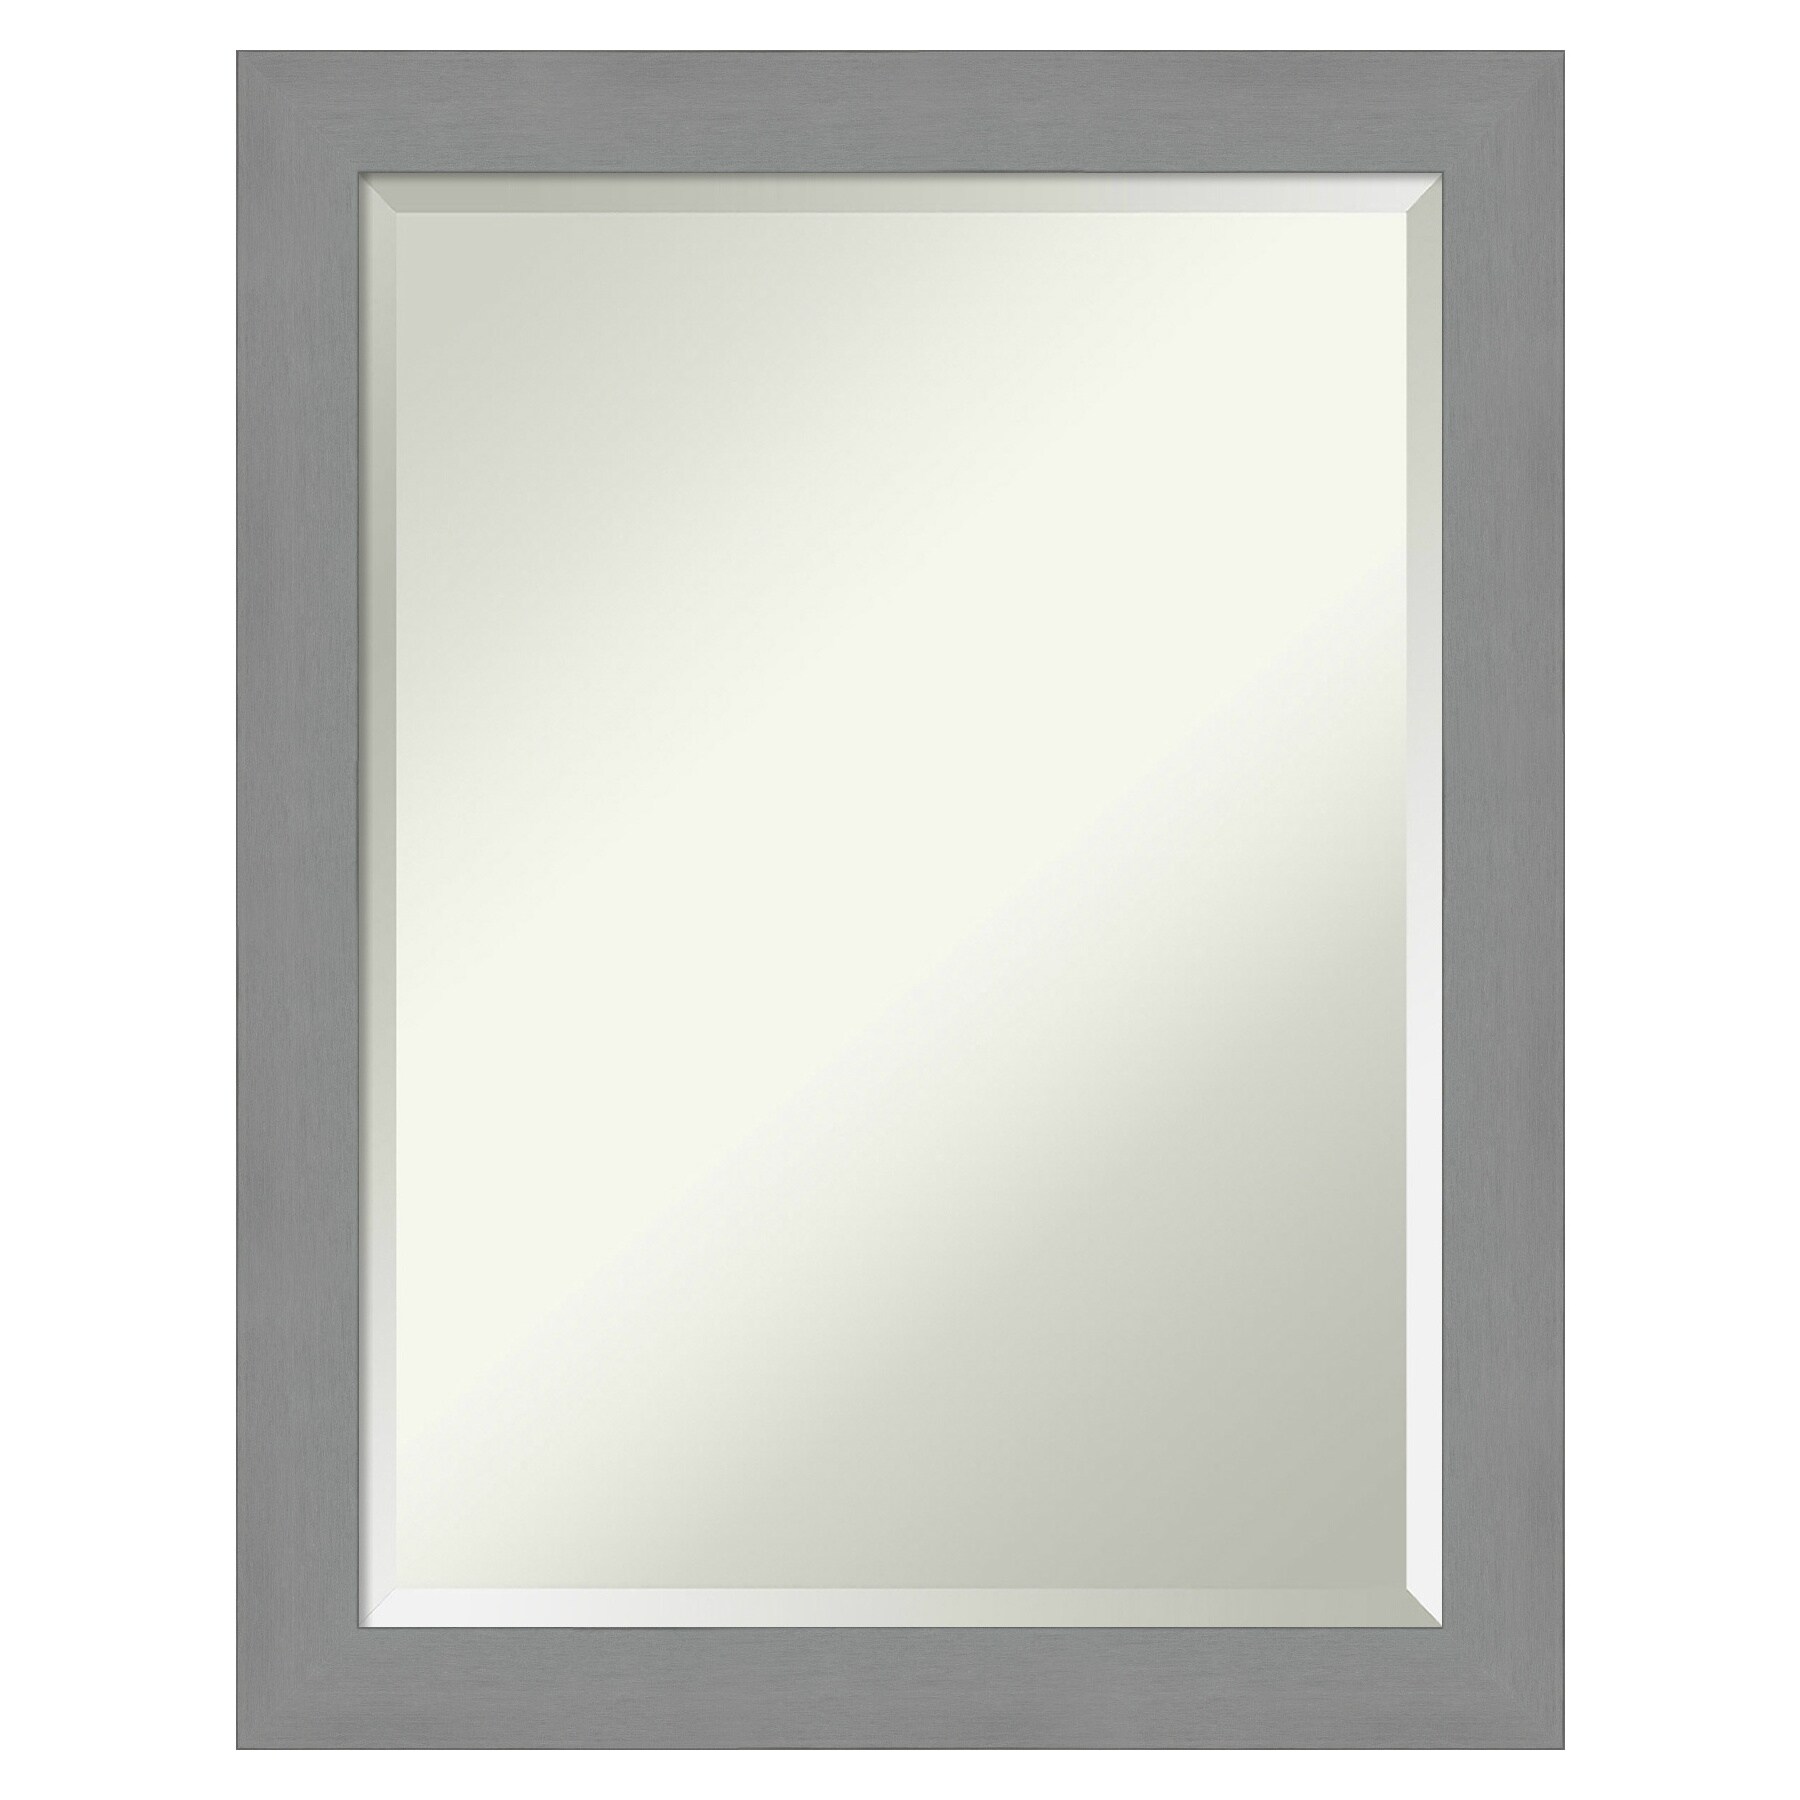 Amanti Art Brushed Nickel Frame 21.5-in W x 27.5-in H Brushed Silver Rectangular Bathroom Vanity Mirror